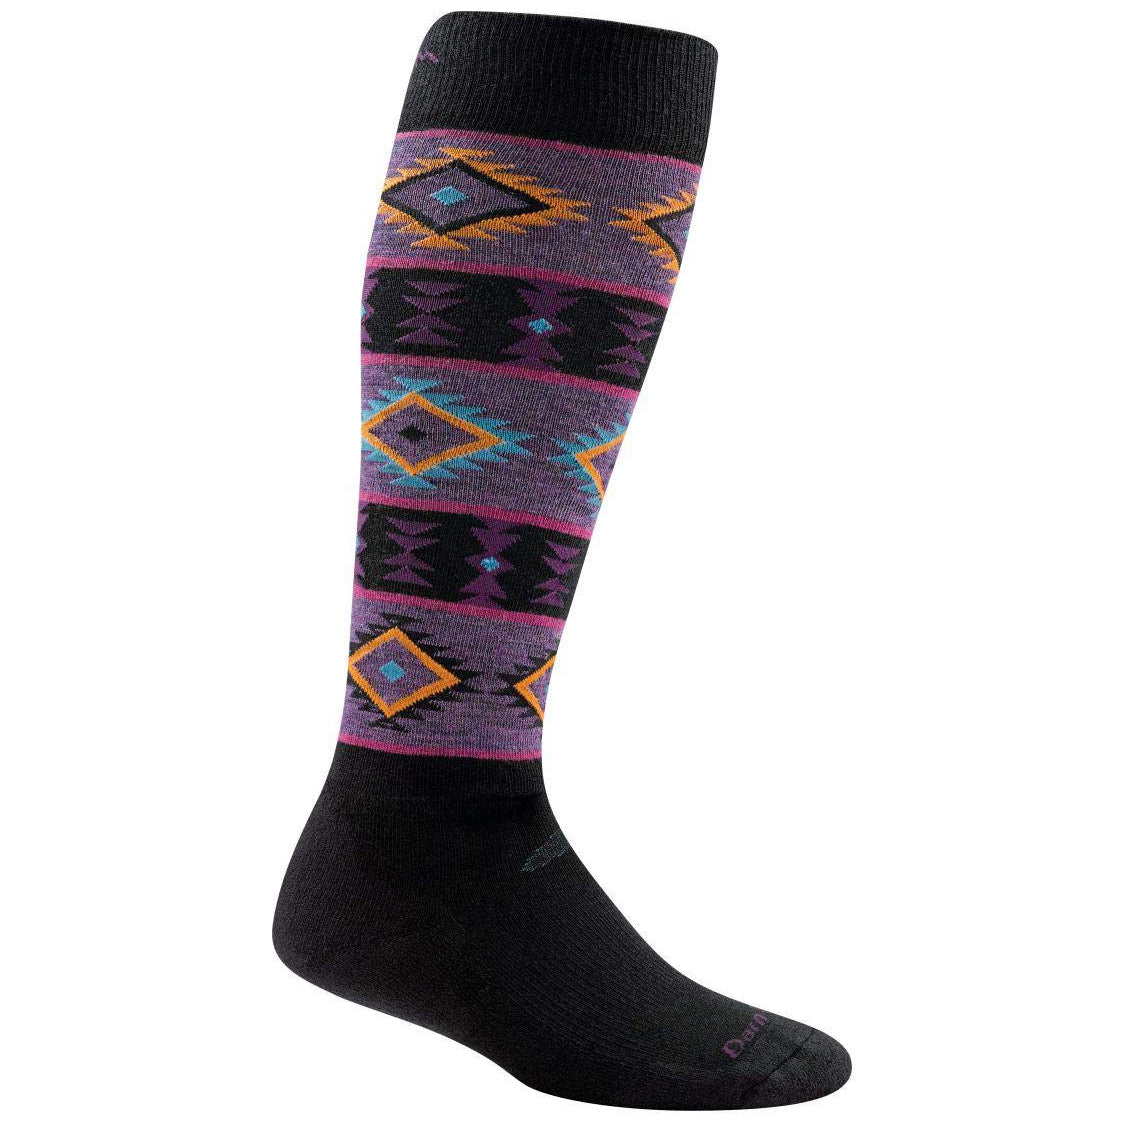 Taos - Cushion - Women's Ski Sock